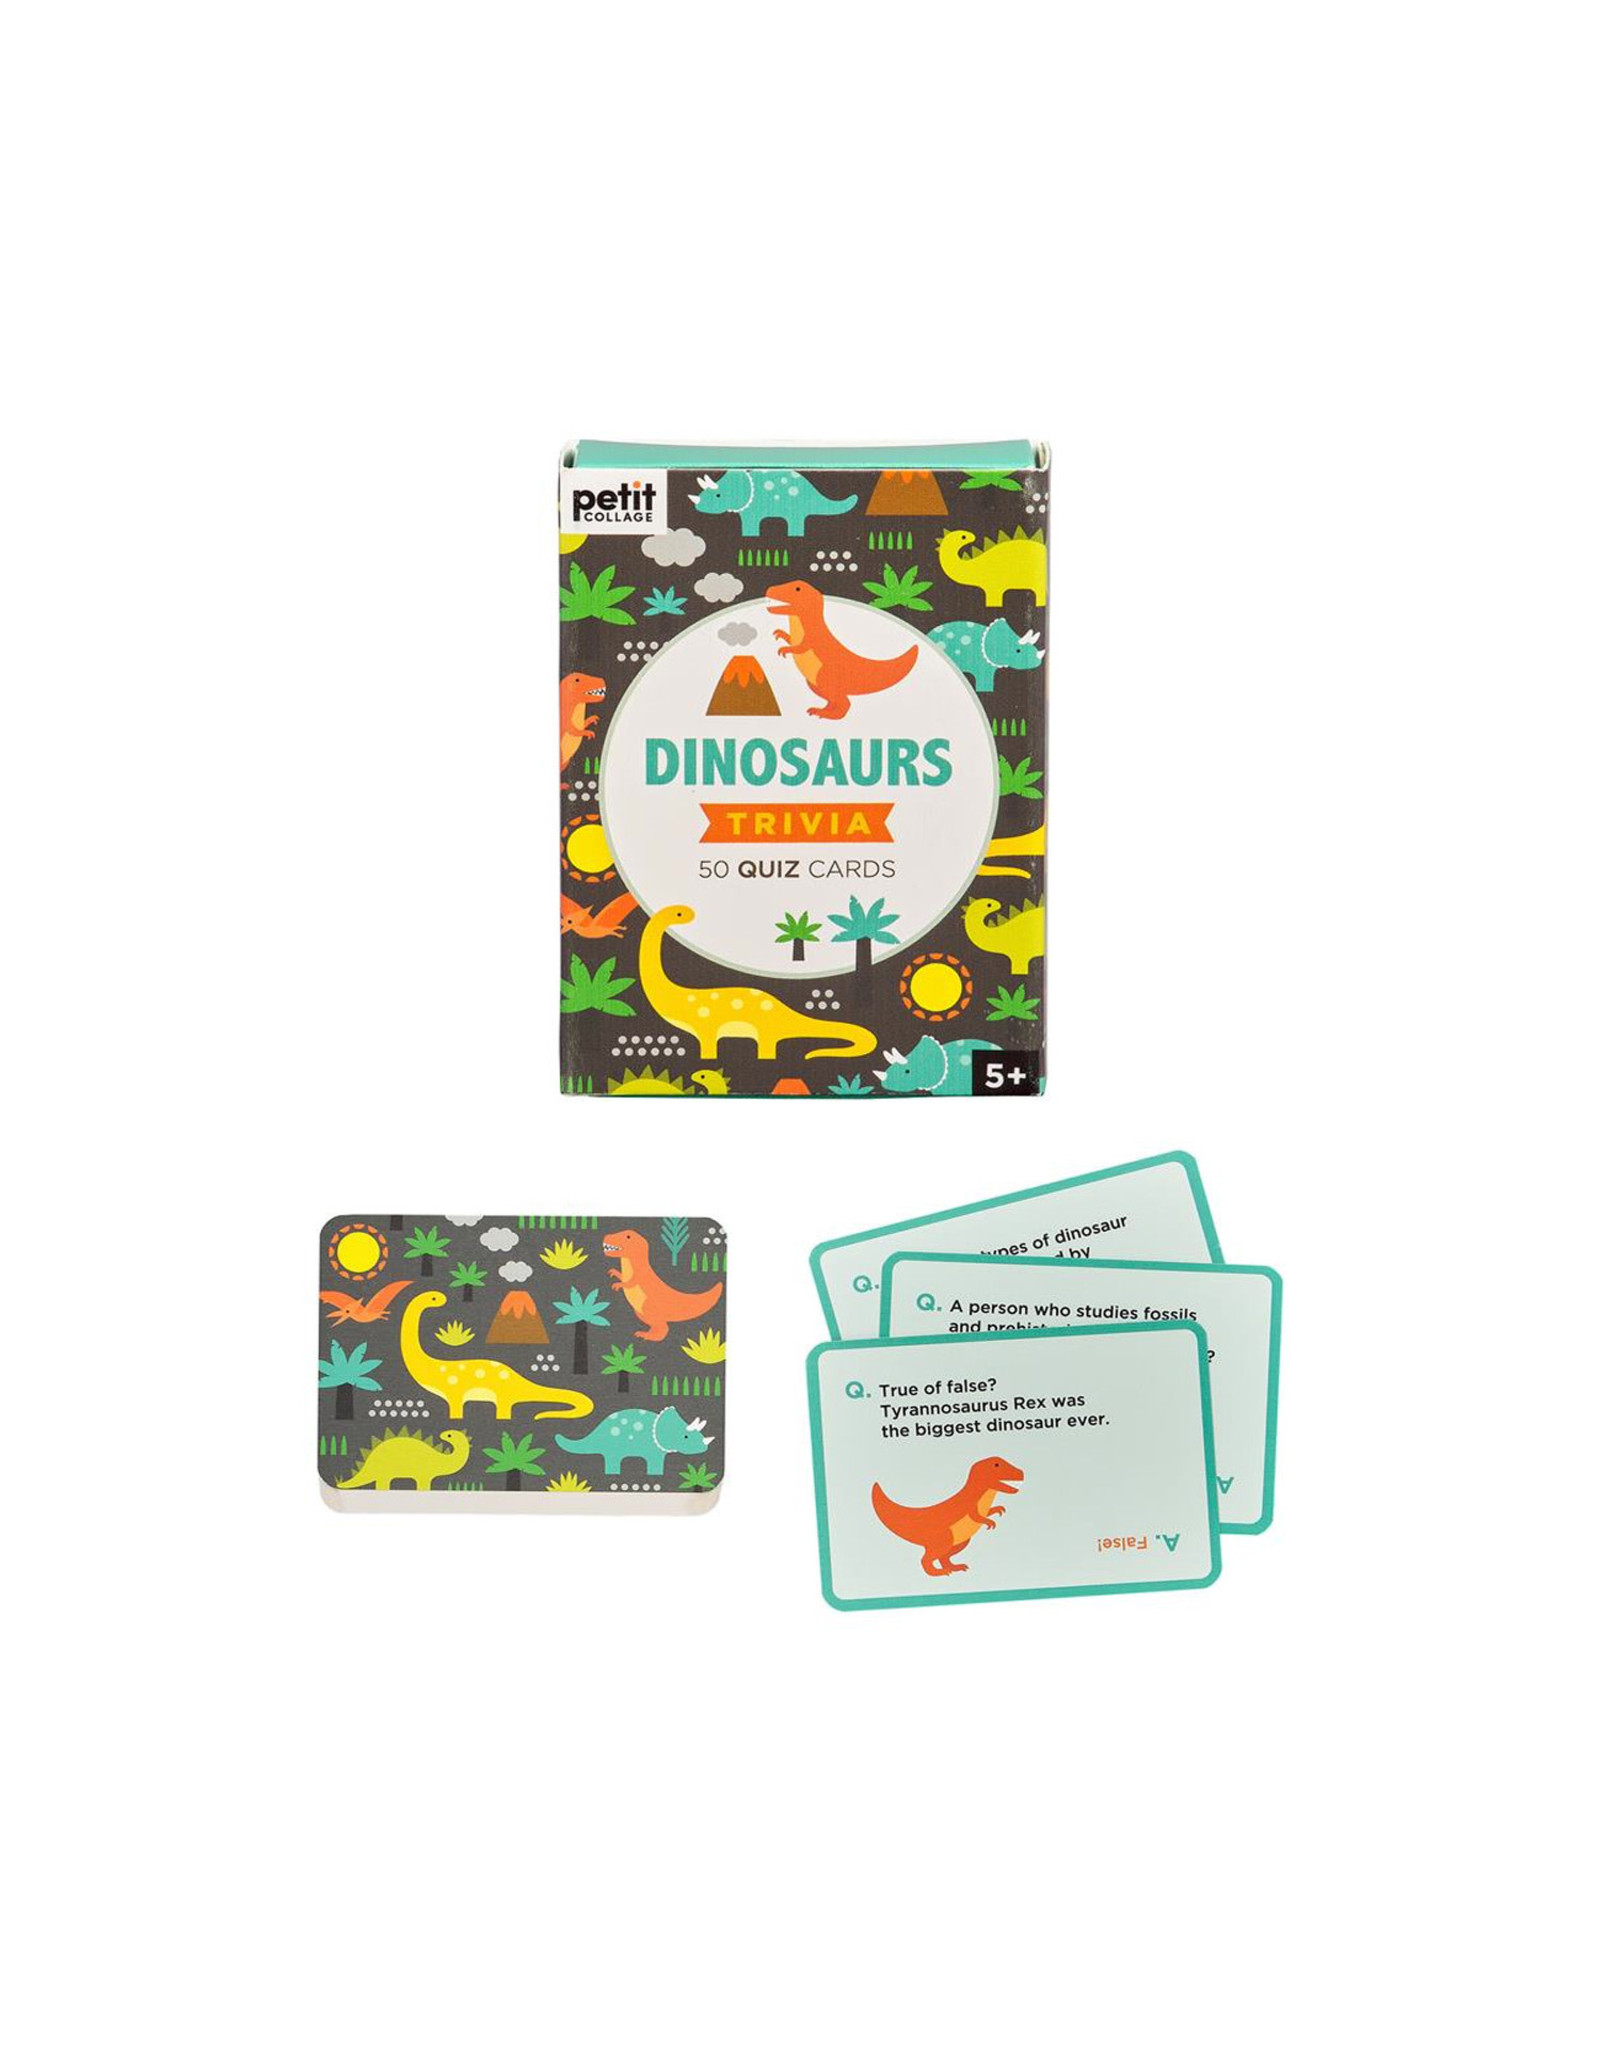 Dinosaurs Trivia Quiz Cards